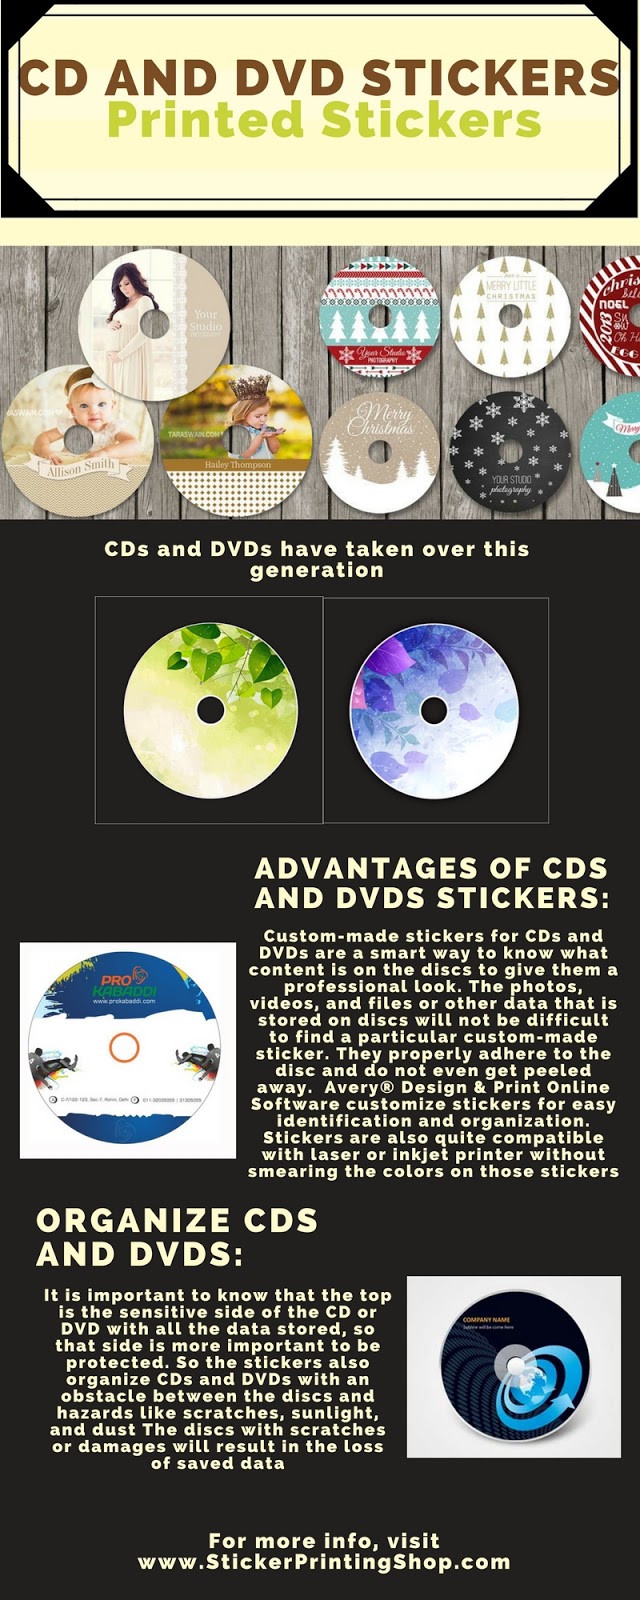 https://stickerprintingshop.com/stickers/cd-dvd-stickers/